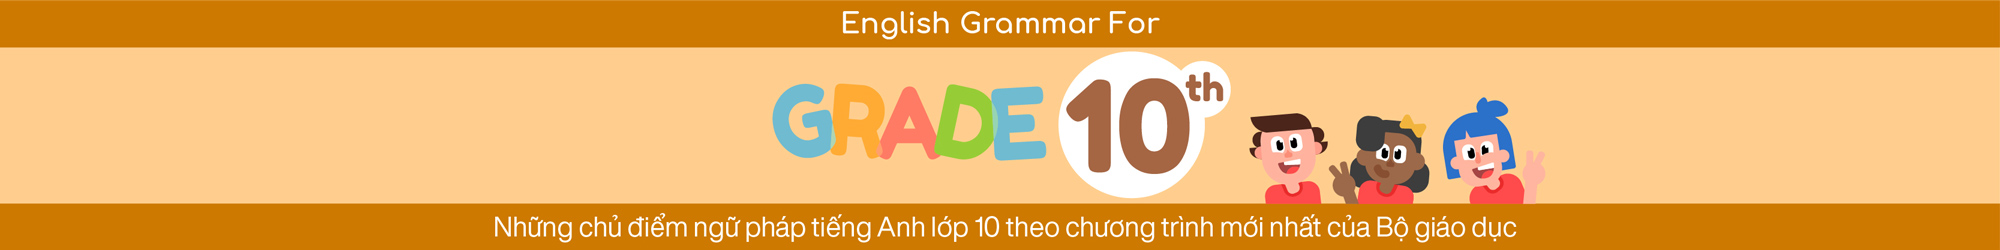 ENGLISH GRAMMAR FOR 10TH GRADE banner